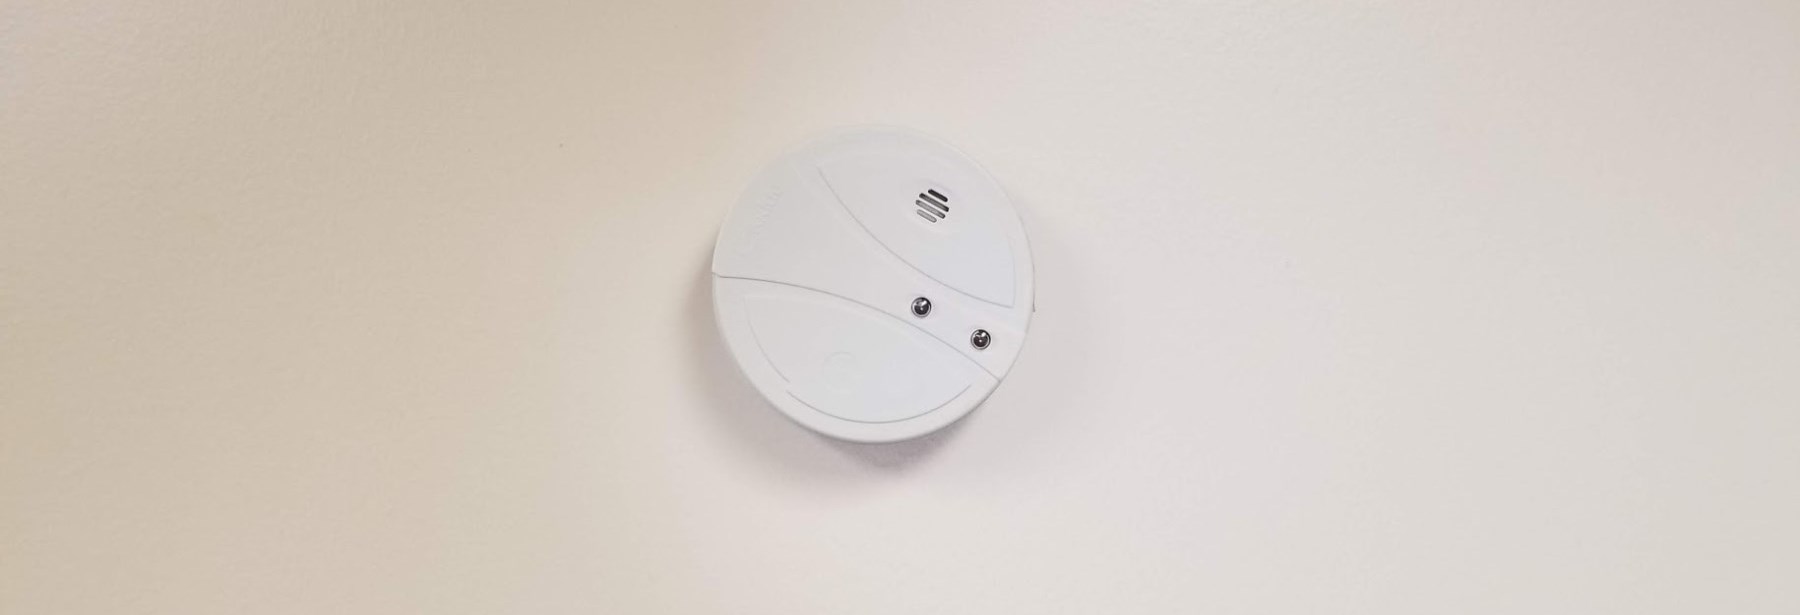 smoke alarm on a ceiling